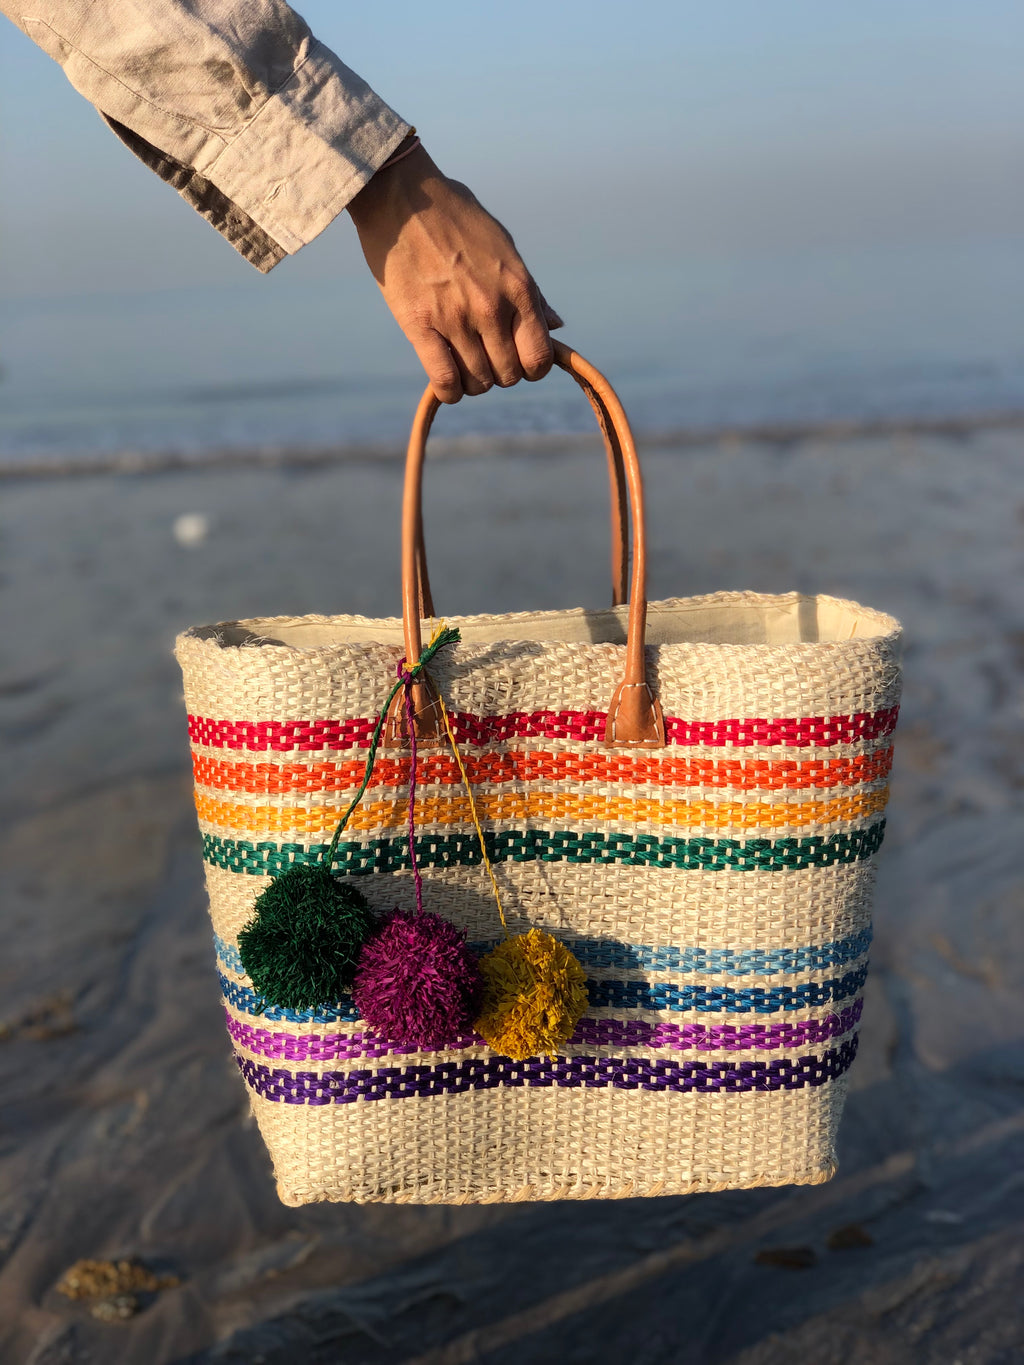 Shop Beach Bags in Mumbai - Swimming Bags for poolside - buy beach totes india